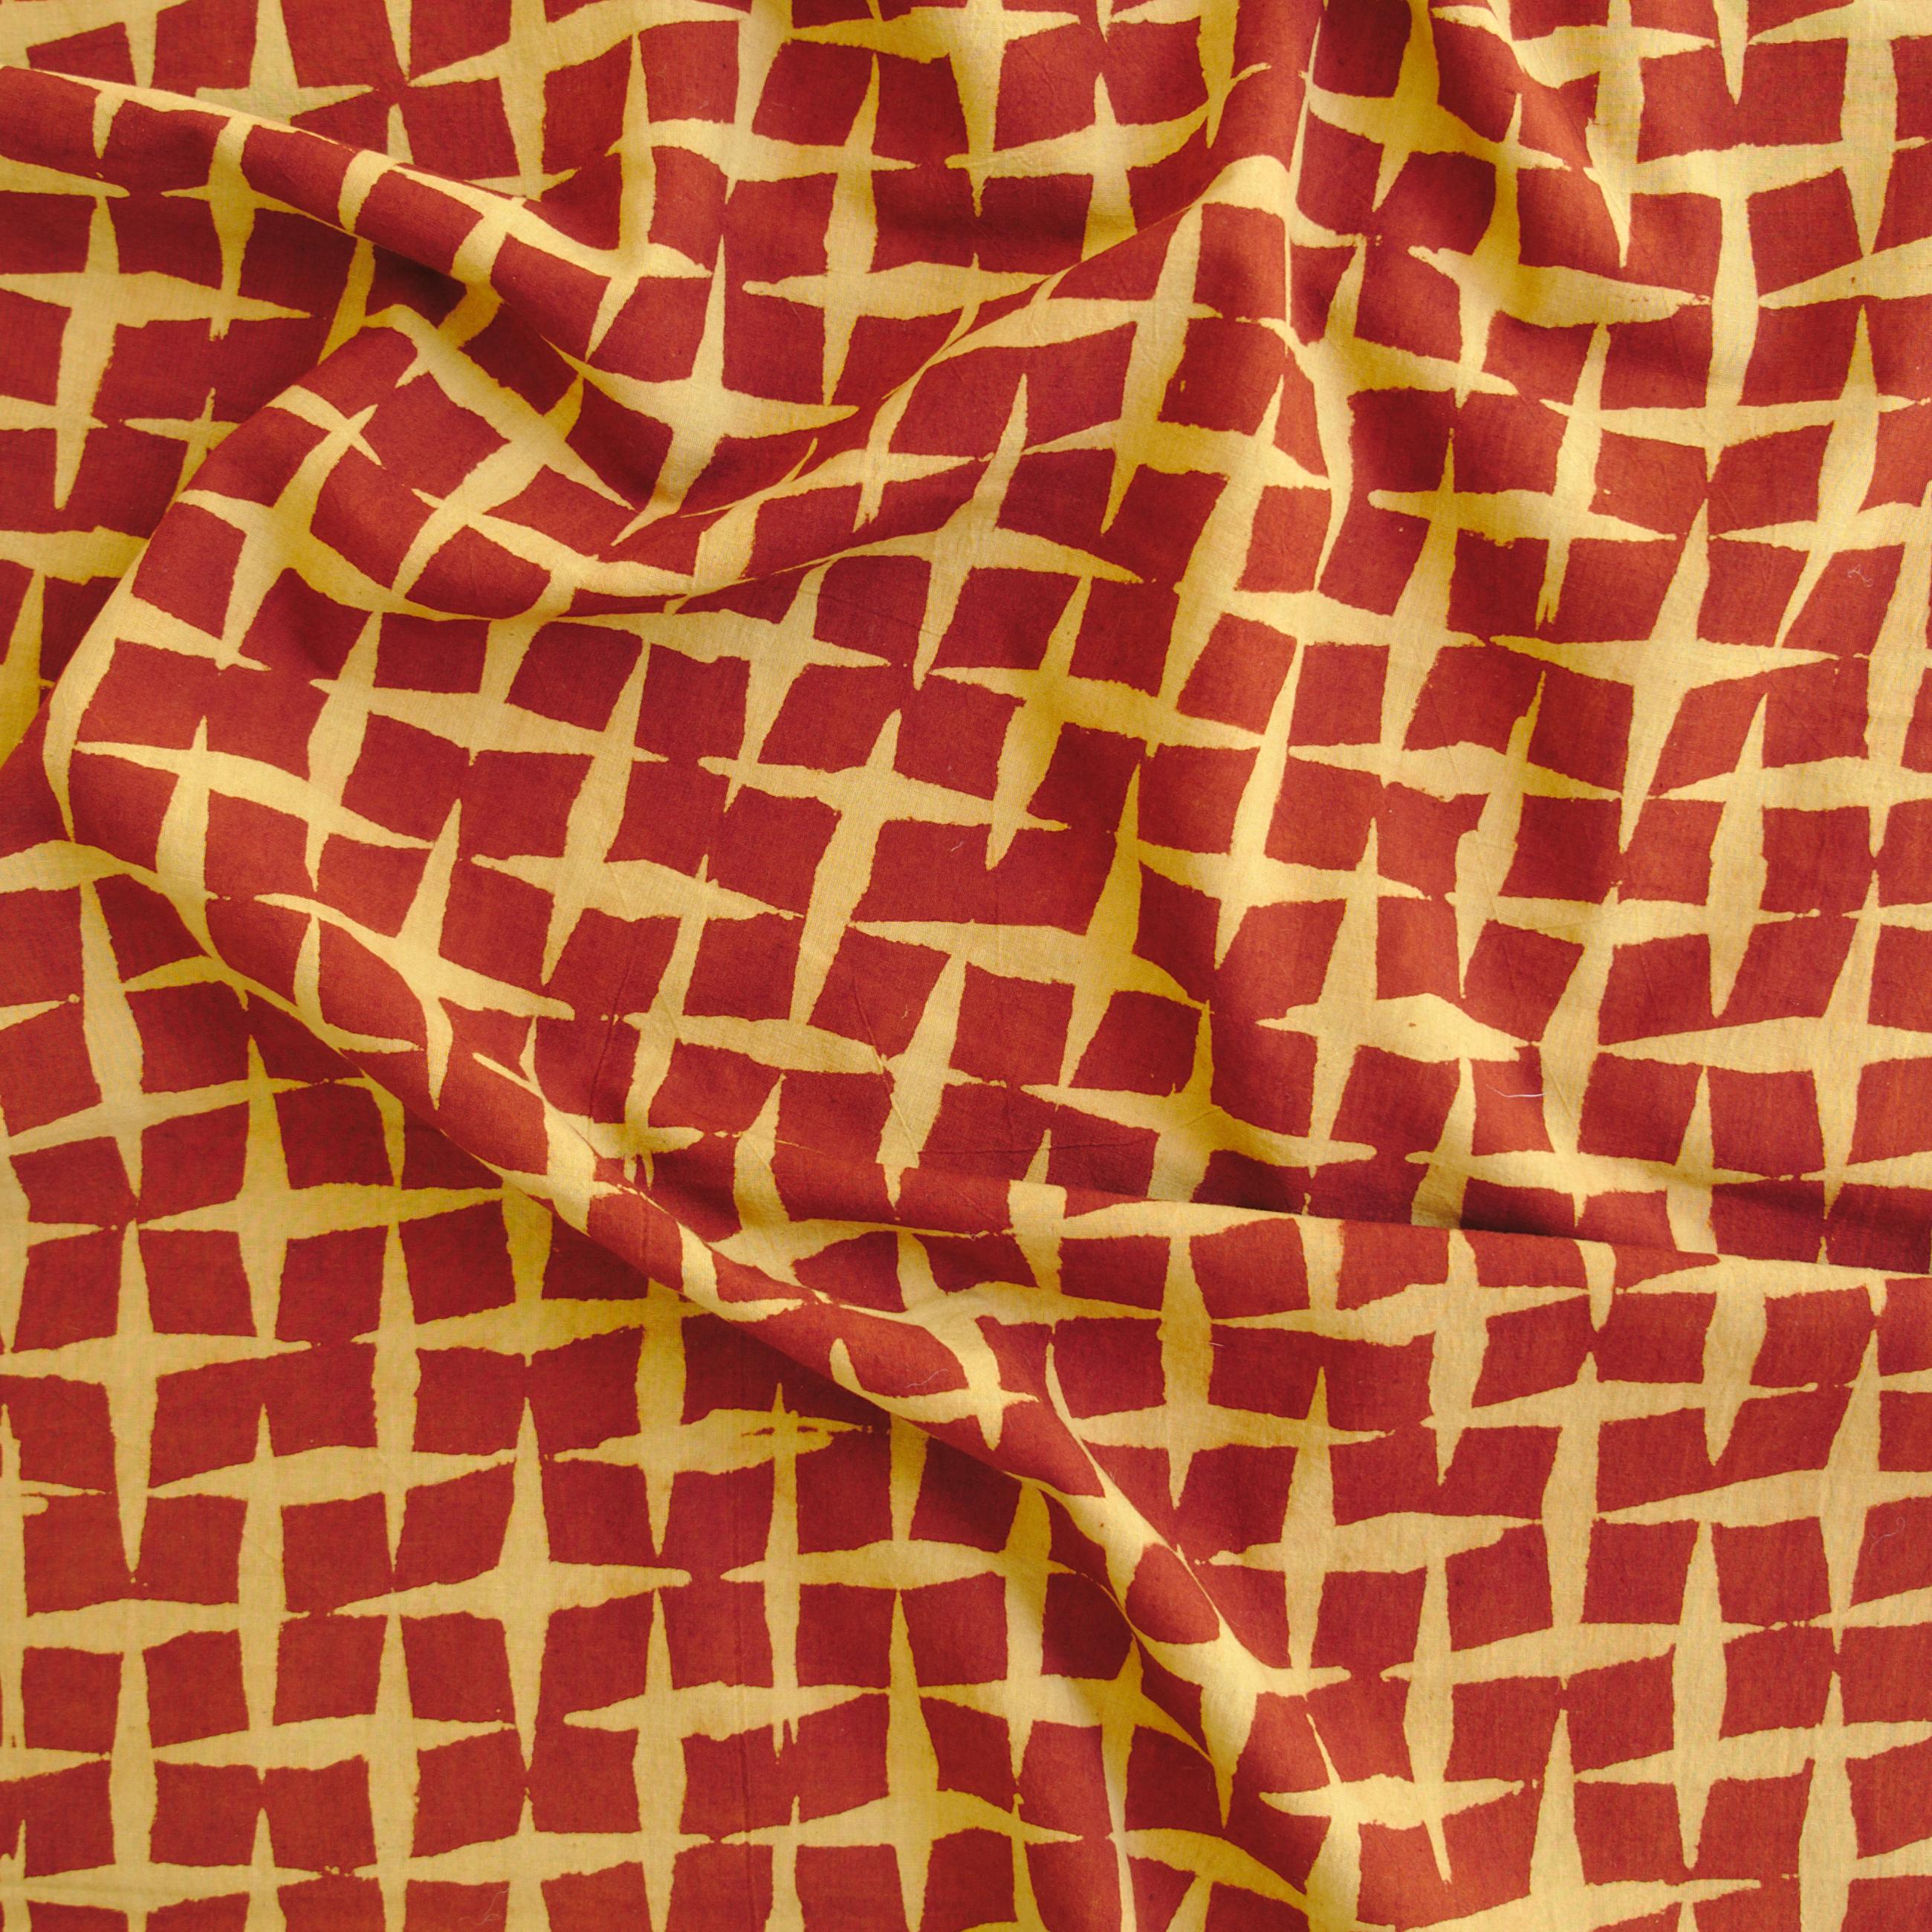 100% Block-Printed Cotton Fabric from India - Ajrak - Alizarin Maroon Crosses, Turmeric Yellow Spray Print